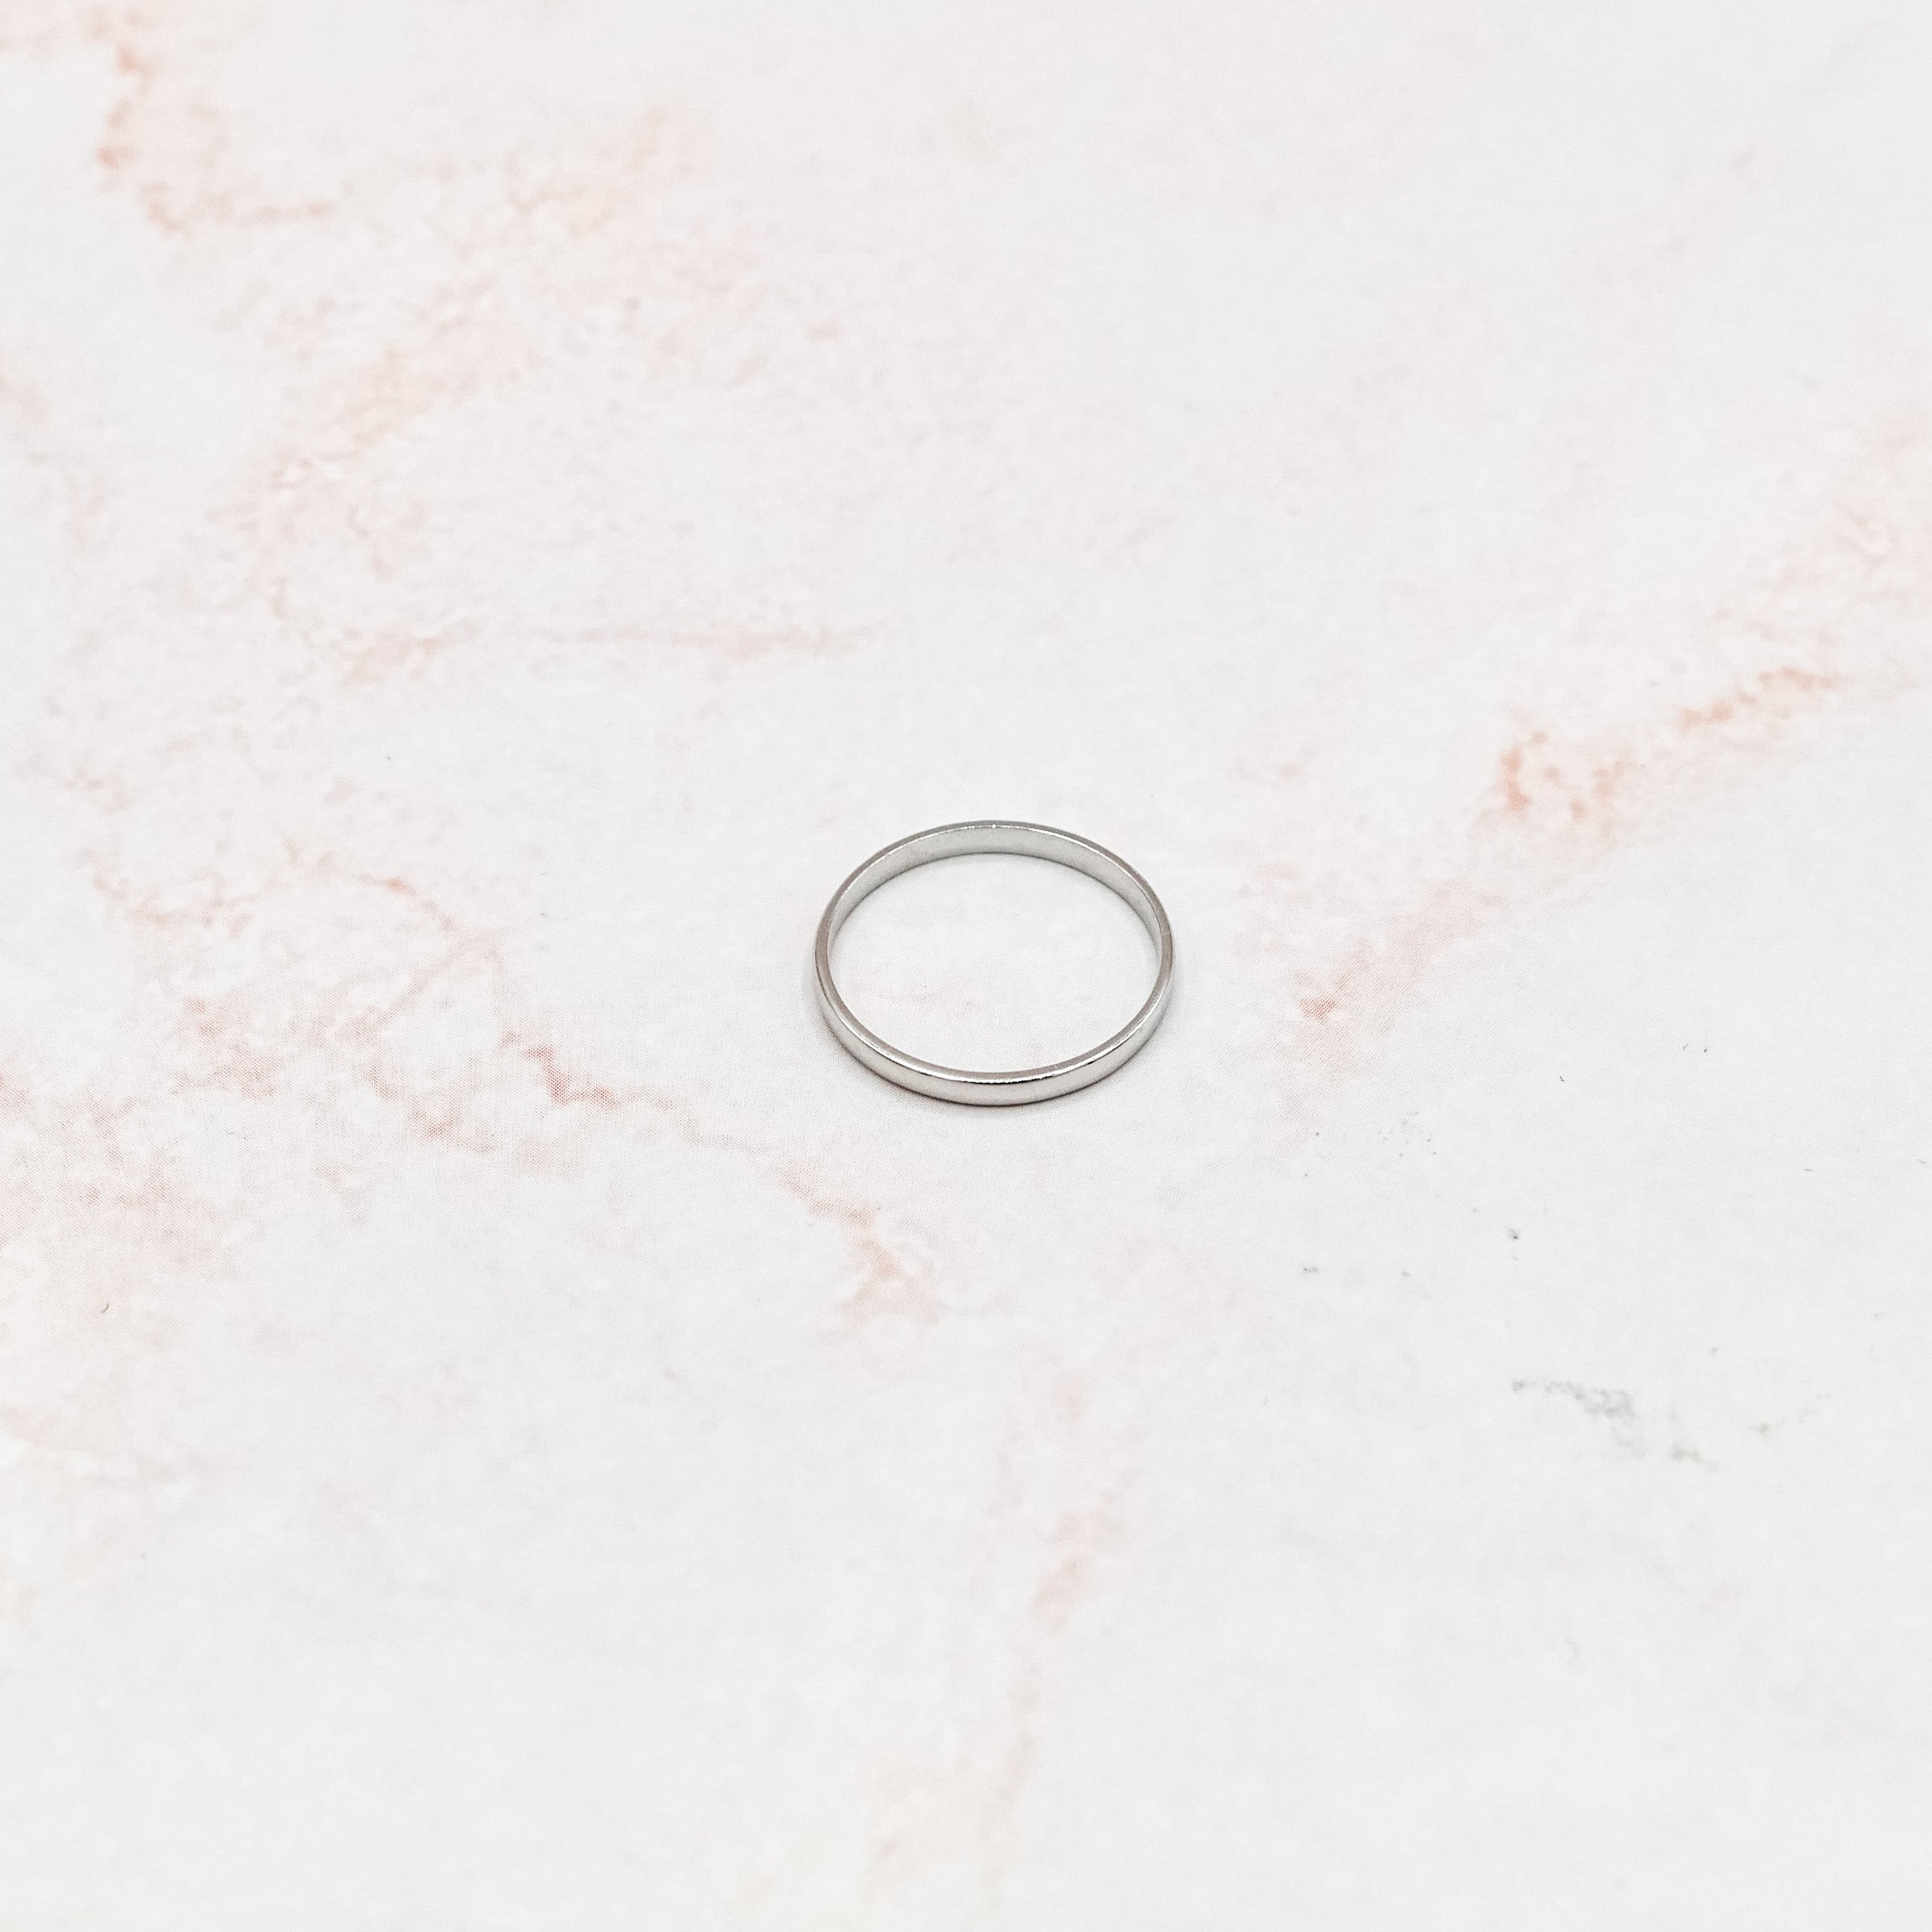 Thin White Gold Band Ring